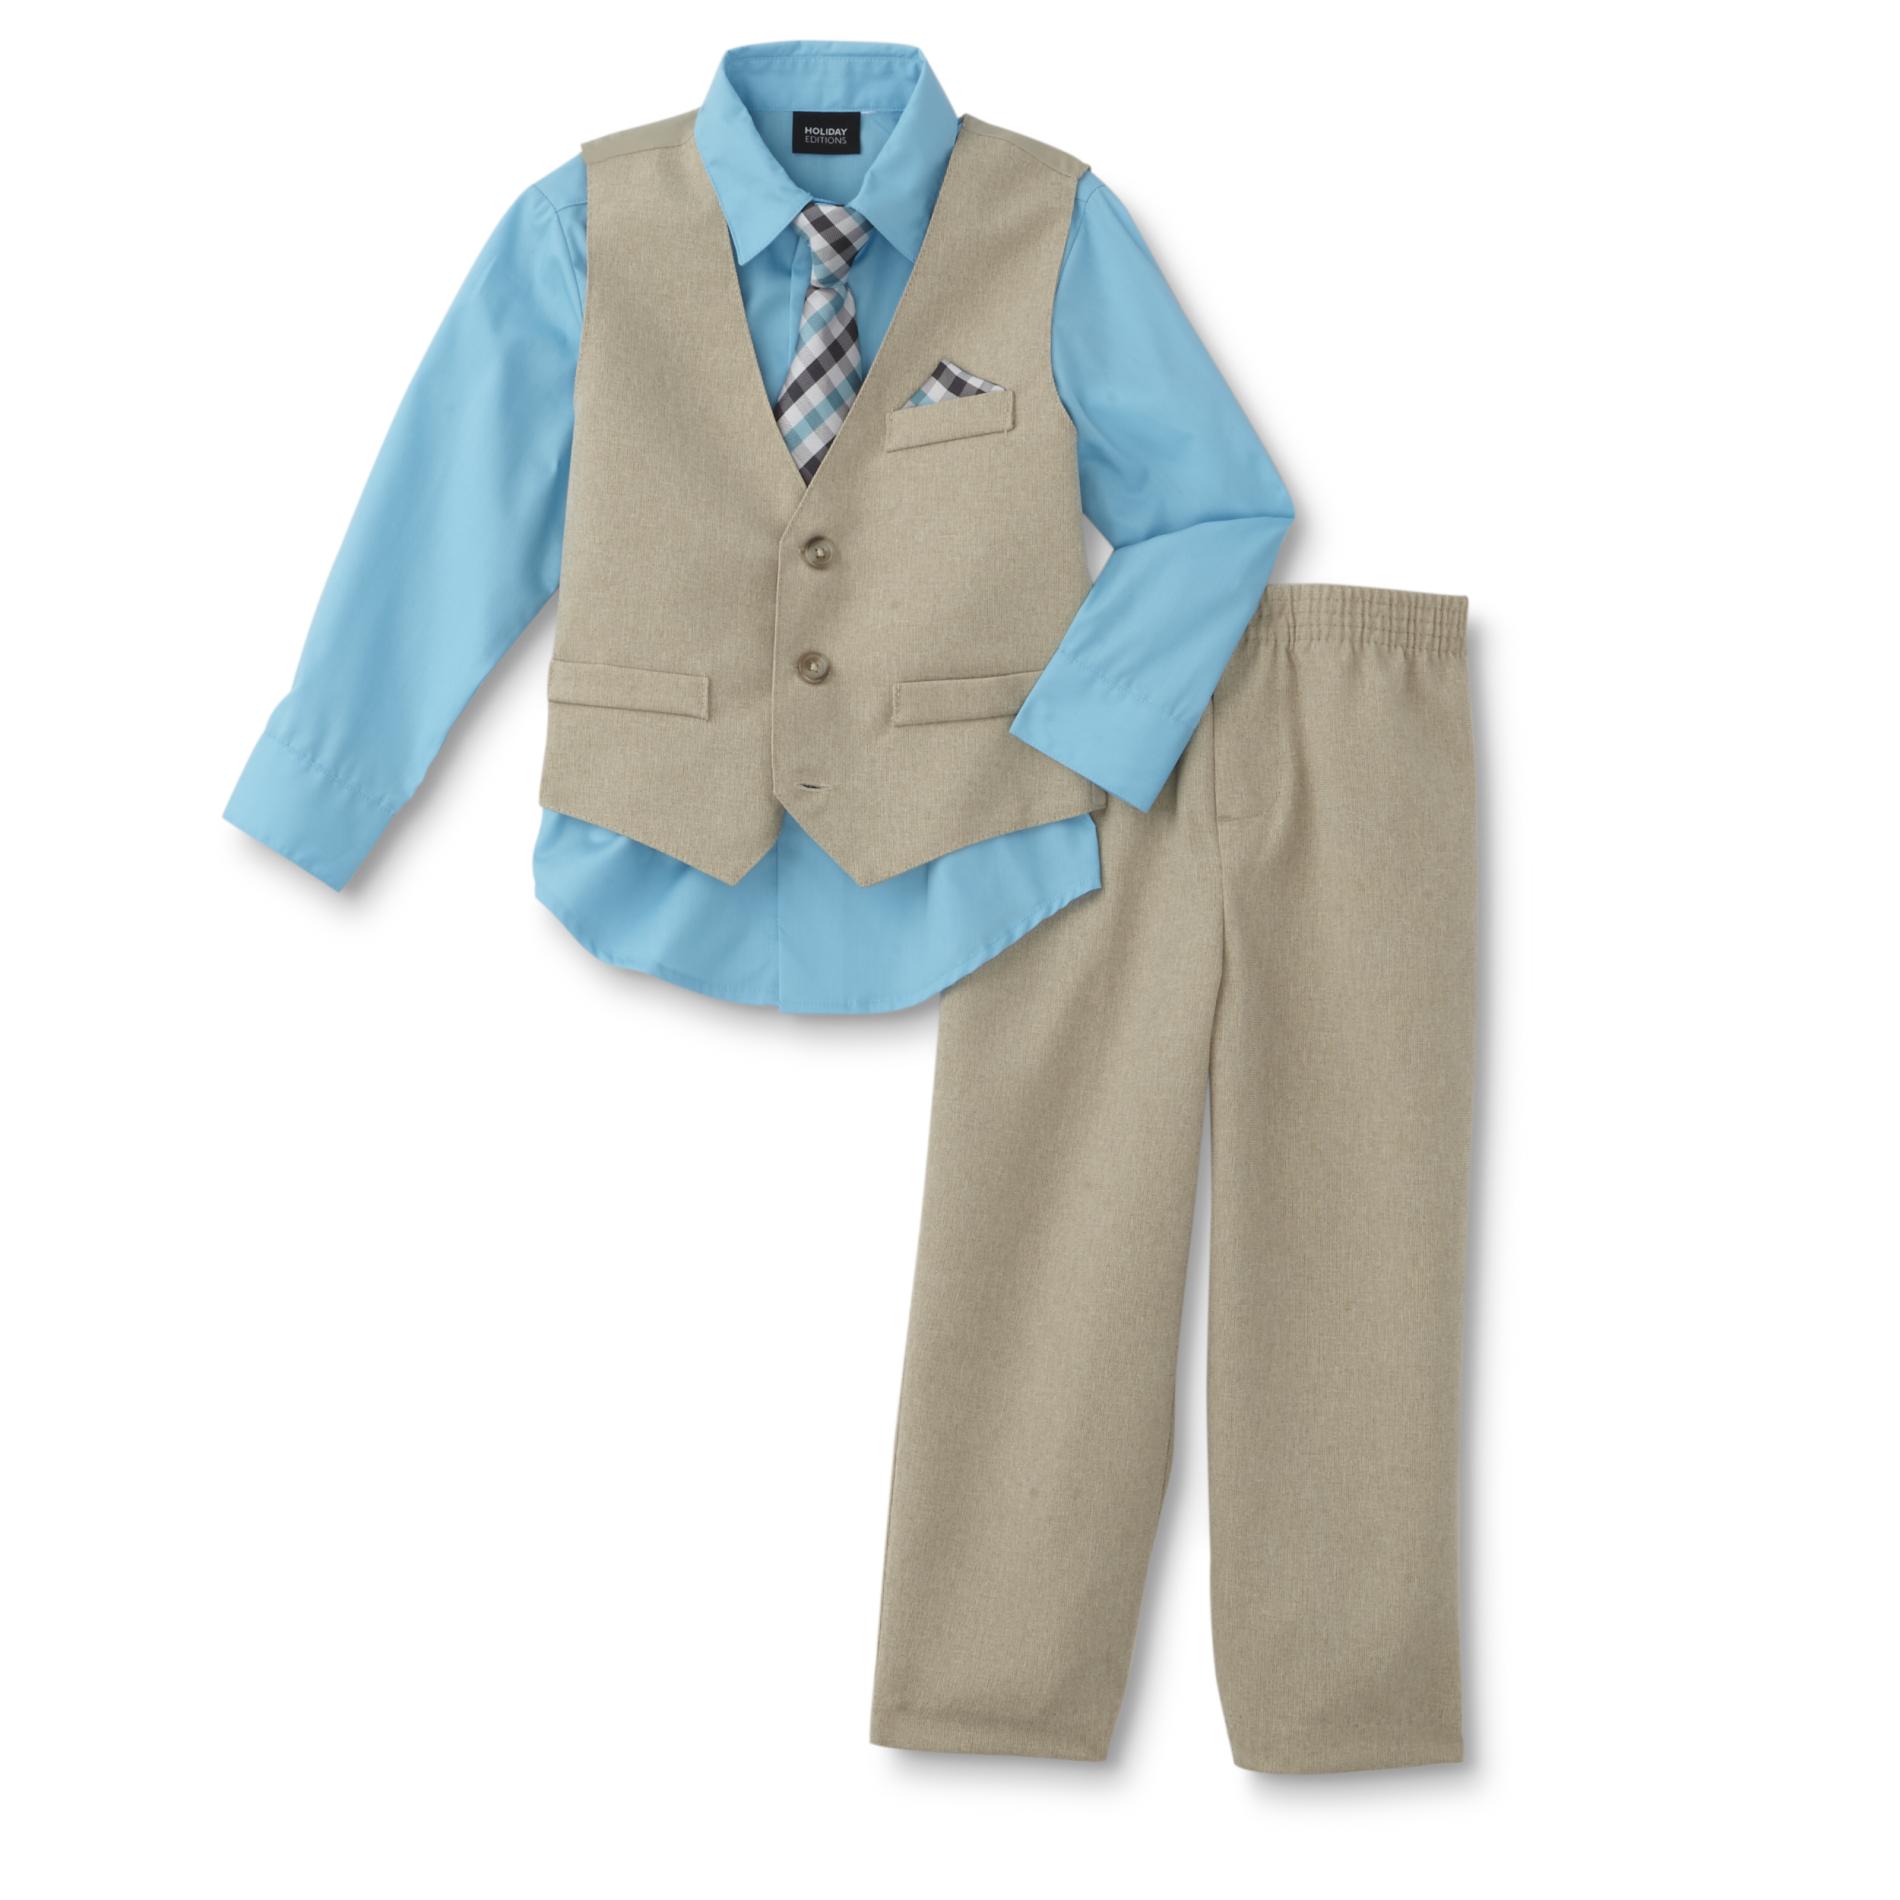 Holiday Editions Infant & Toddler Boys' Vest, Dress Shirt, Necktie & Pants